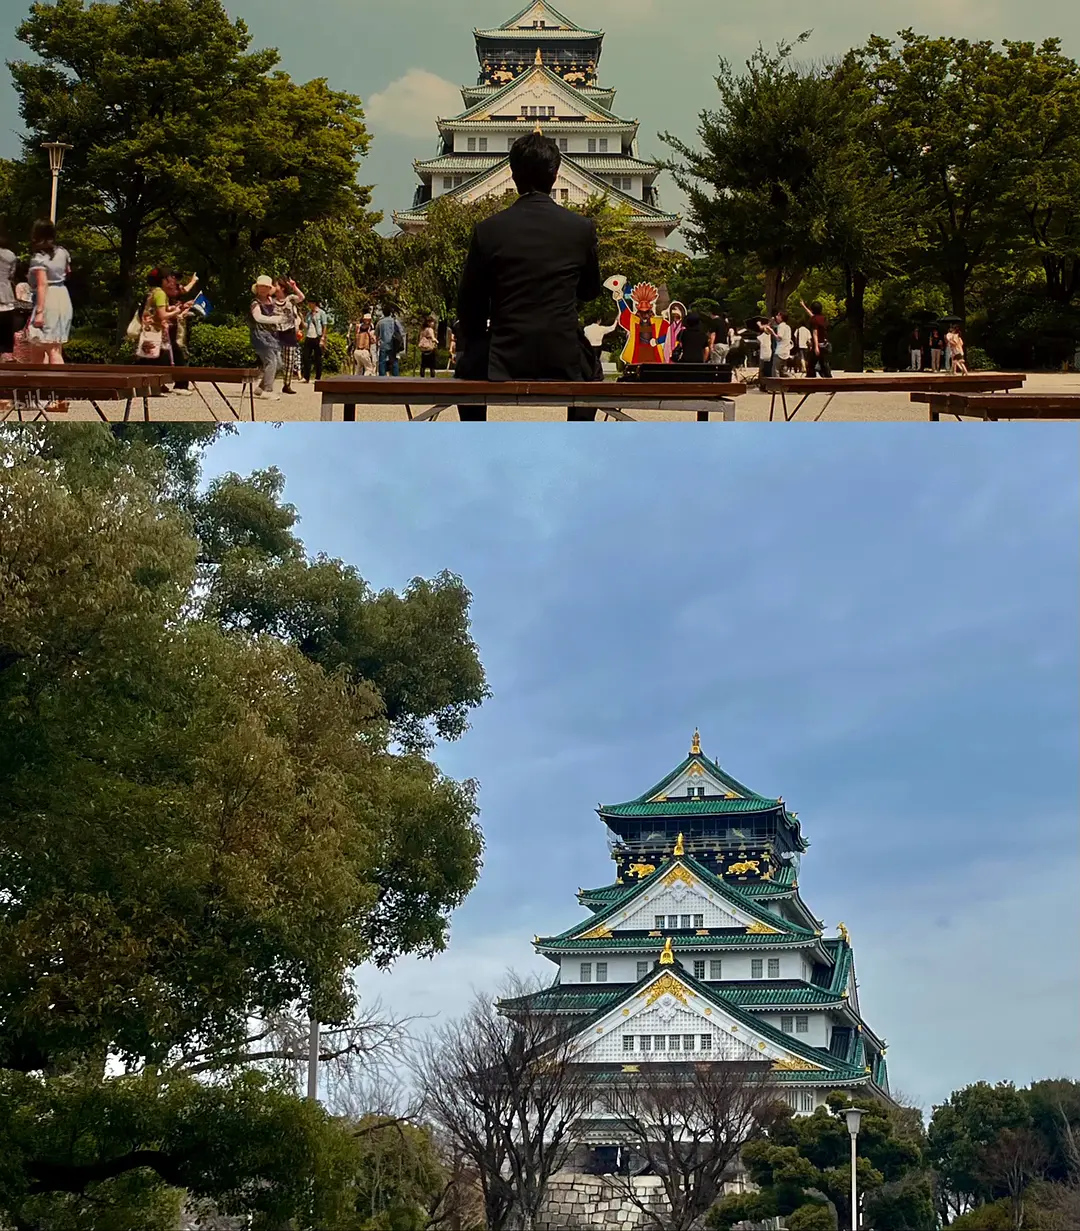 Osaka-People with a perceiving personality: Osaka, Kyoto, Hiroshima, a pilgrimage to holy sites